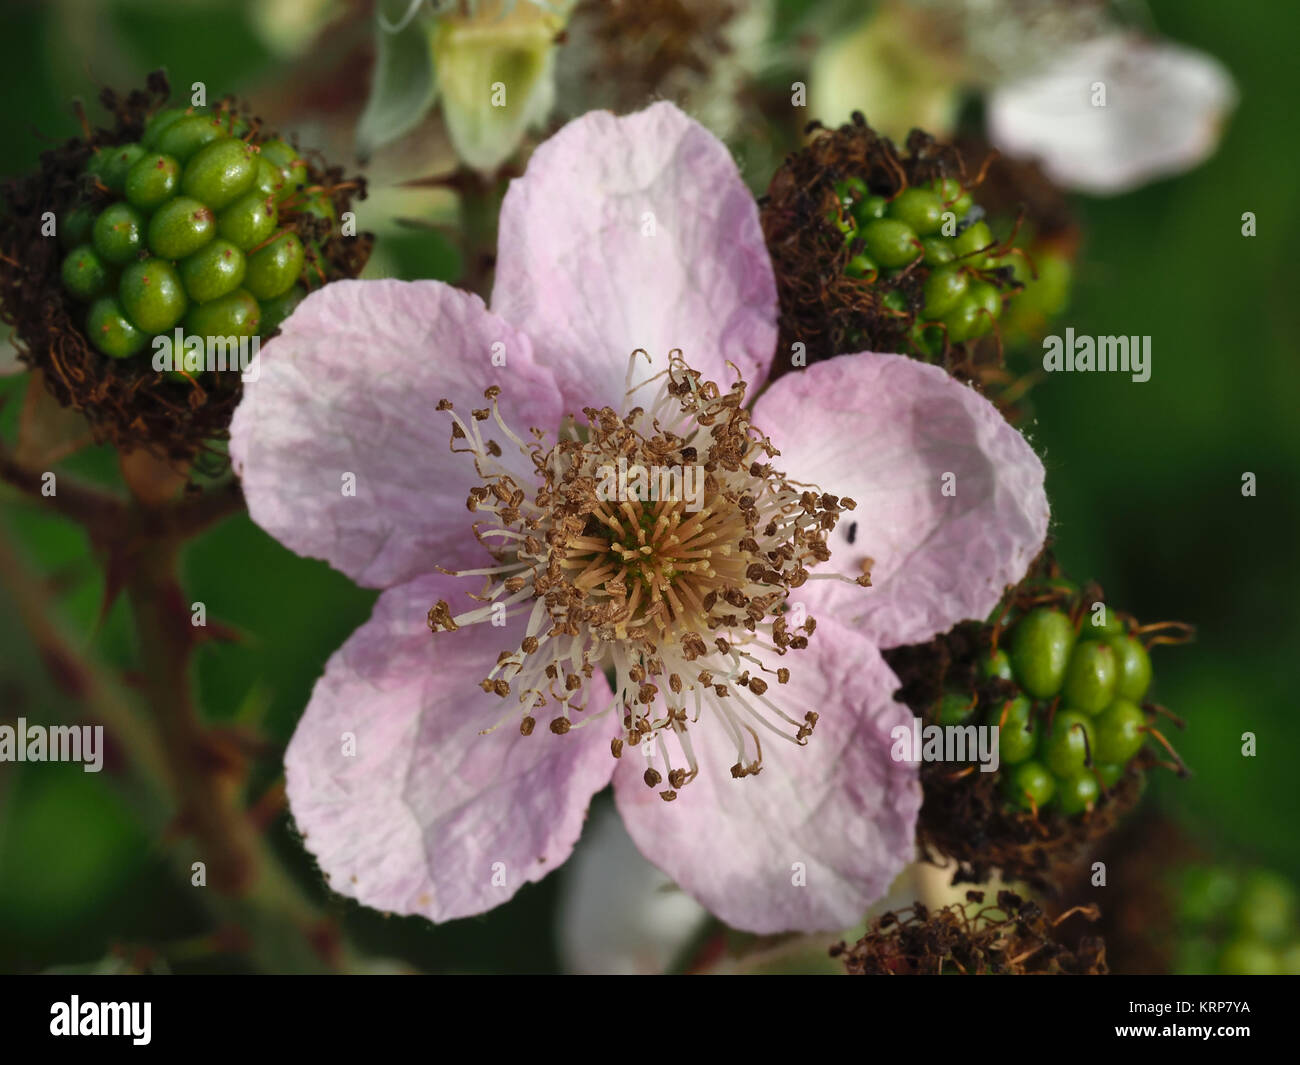 Himalayan blackberry (Rubus armeniacus) flower and unripe green berries Stock Photo